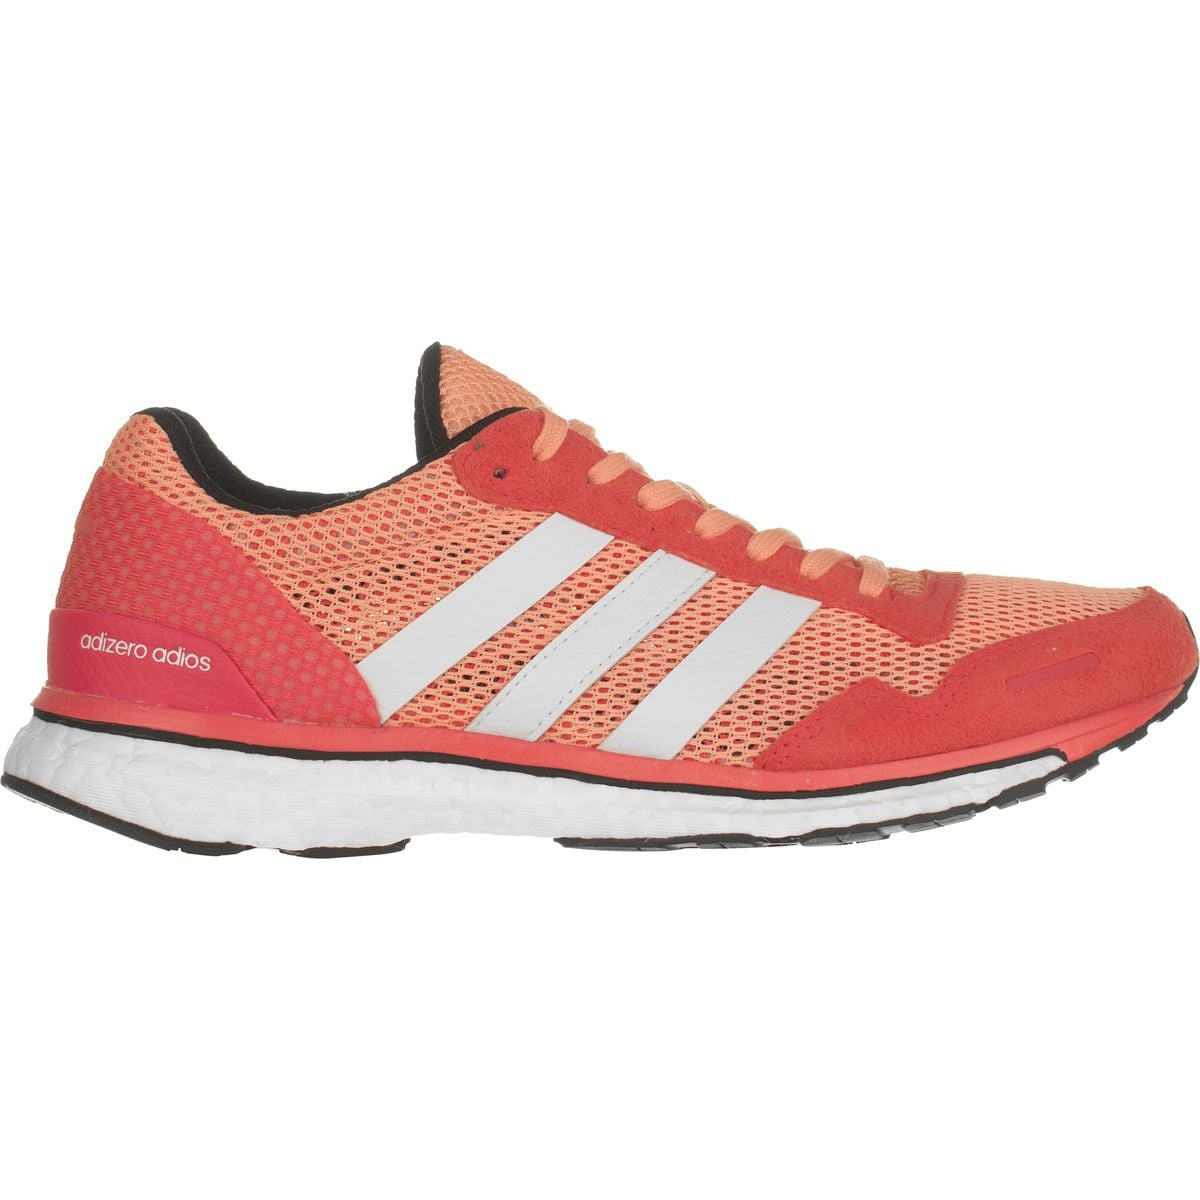 Adidas Adizero Adios 3 Boost Running Shoe - Women's - Footwear